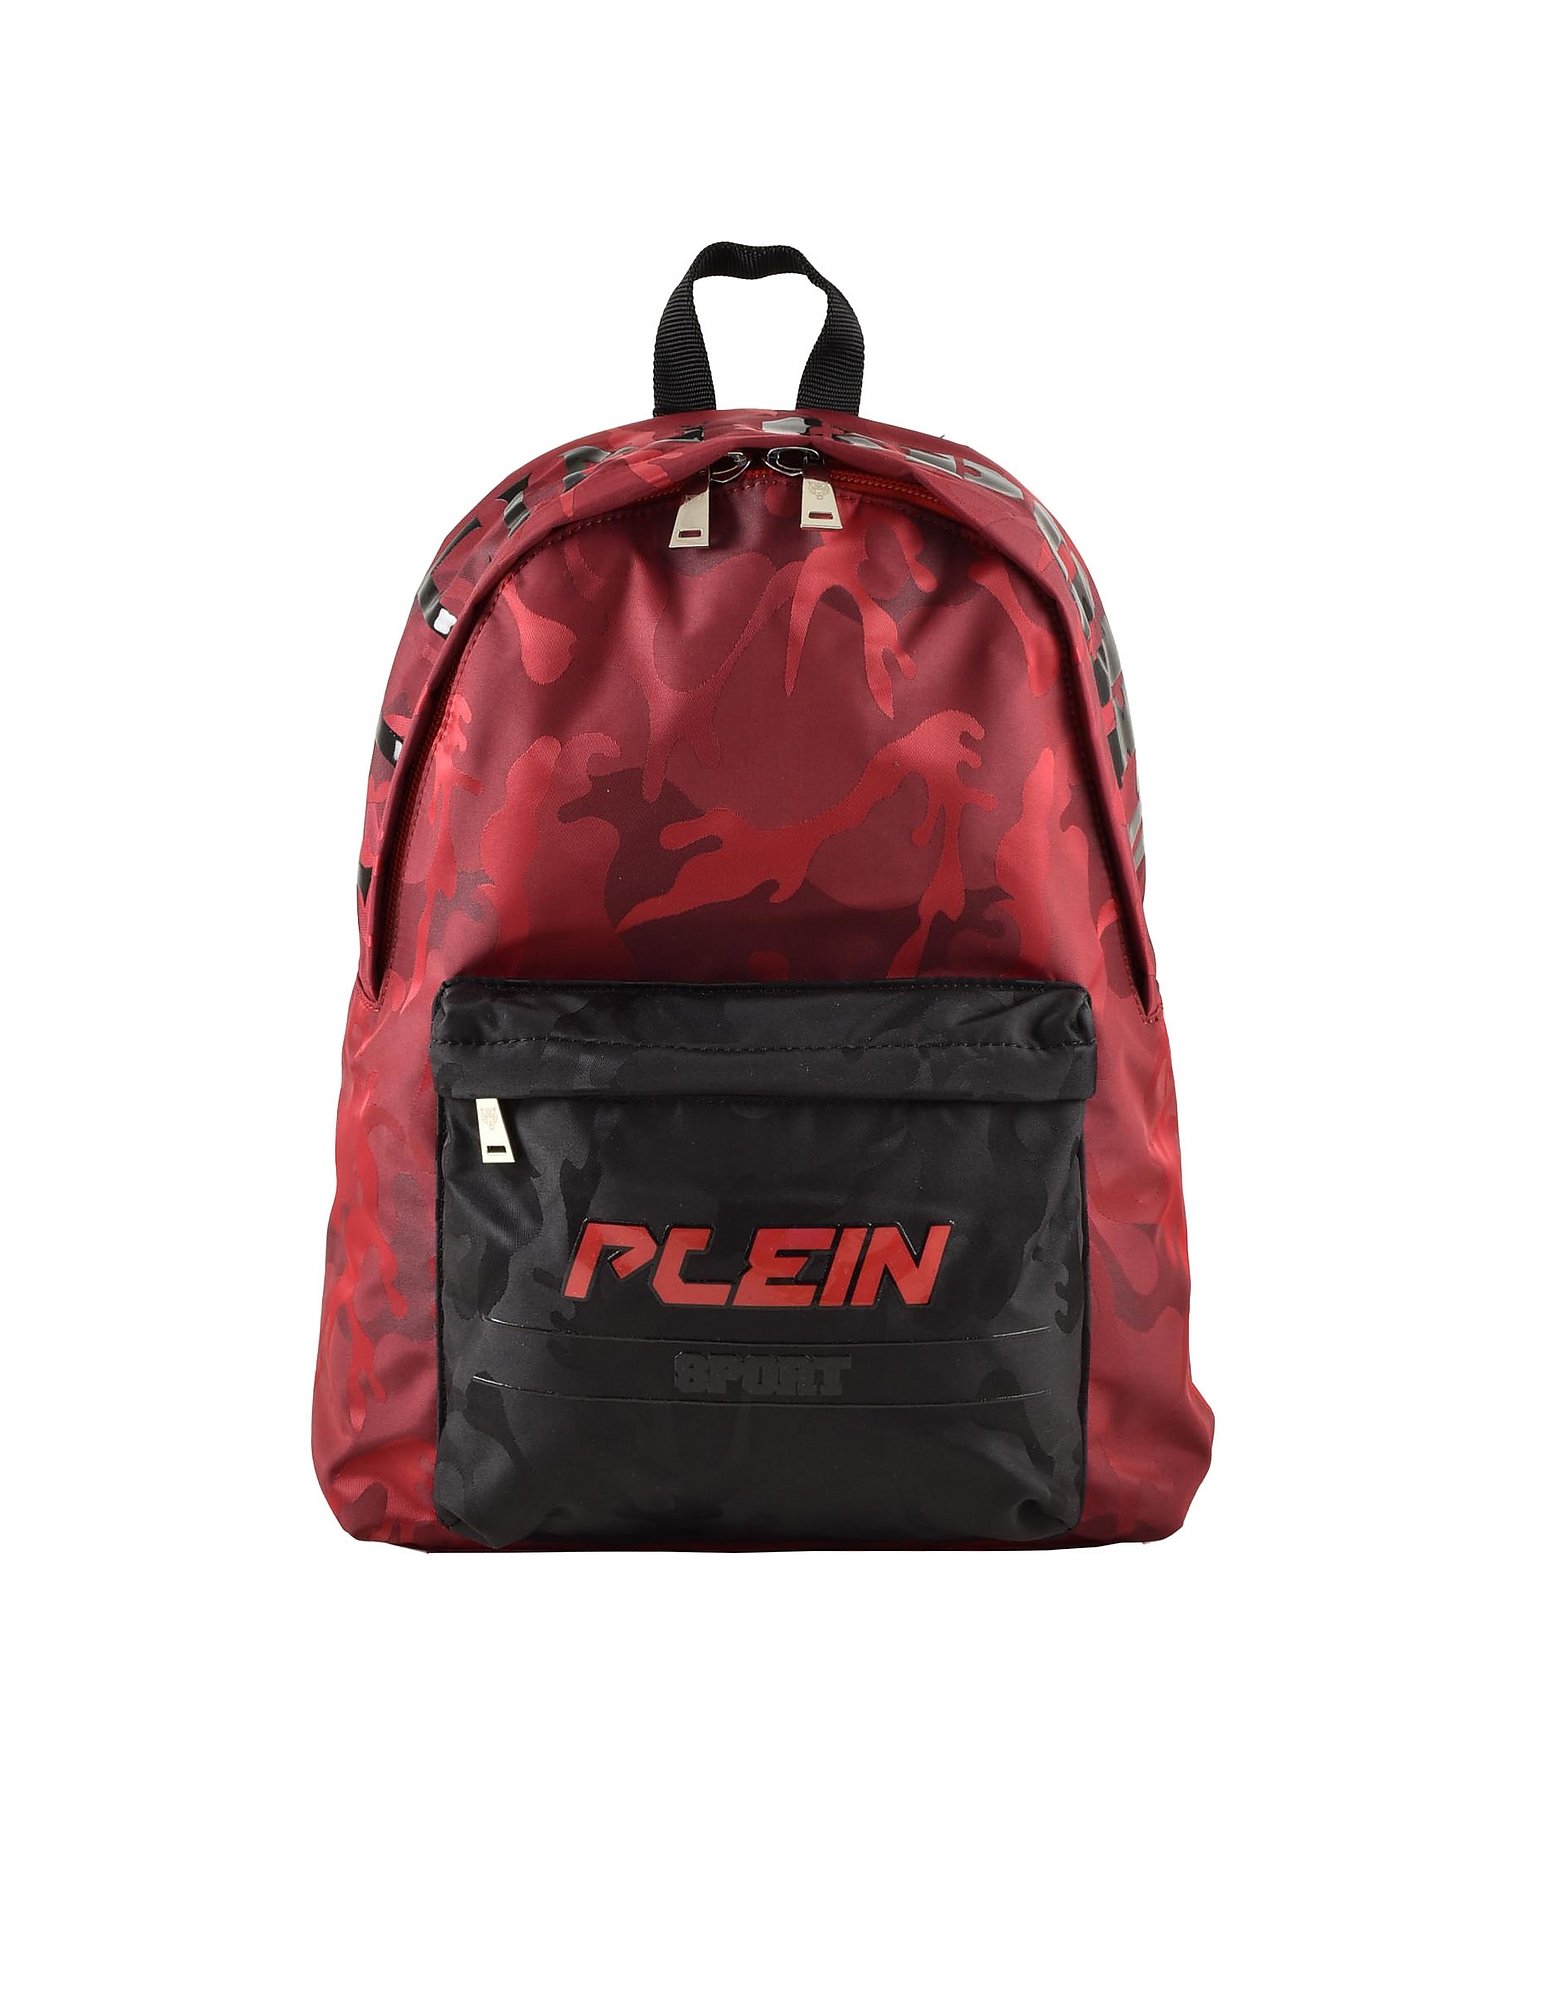 Men's Bags Men's Red Backpack